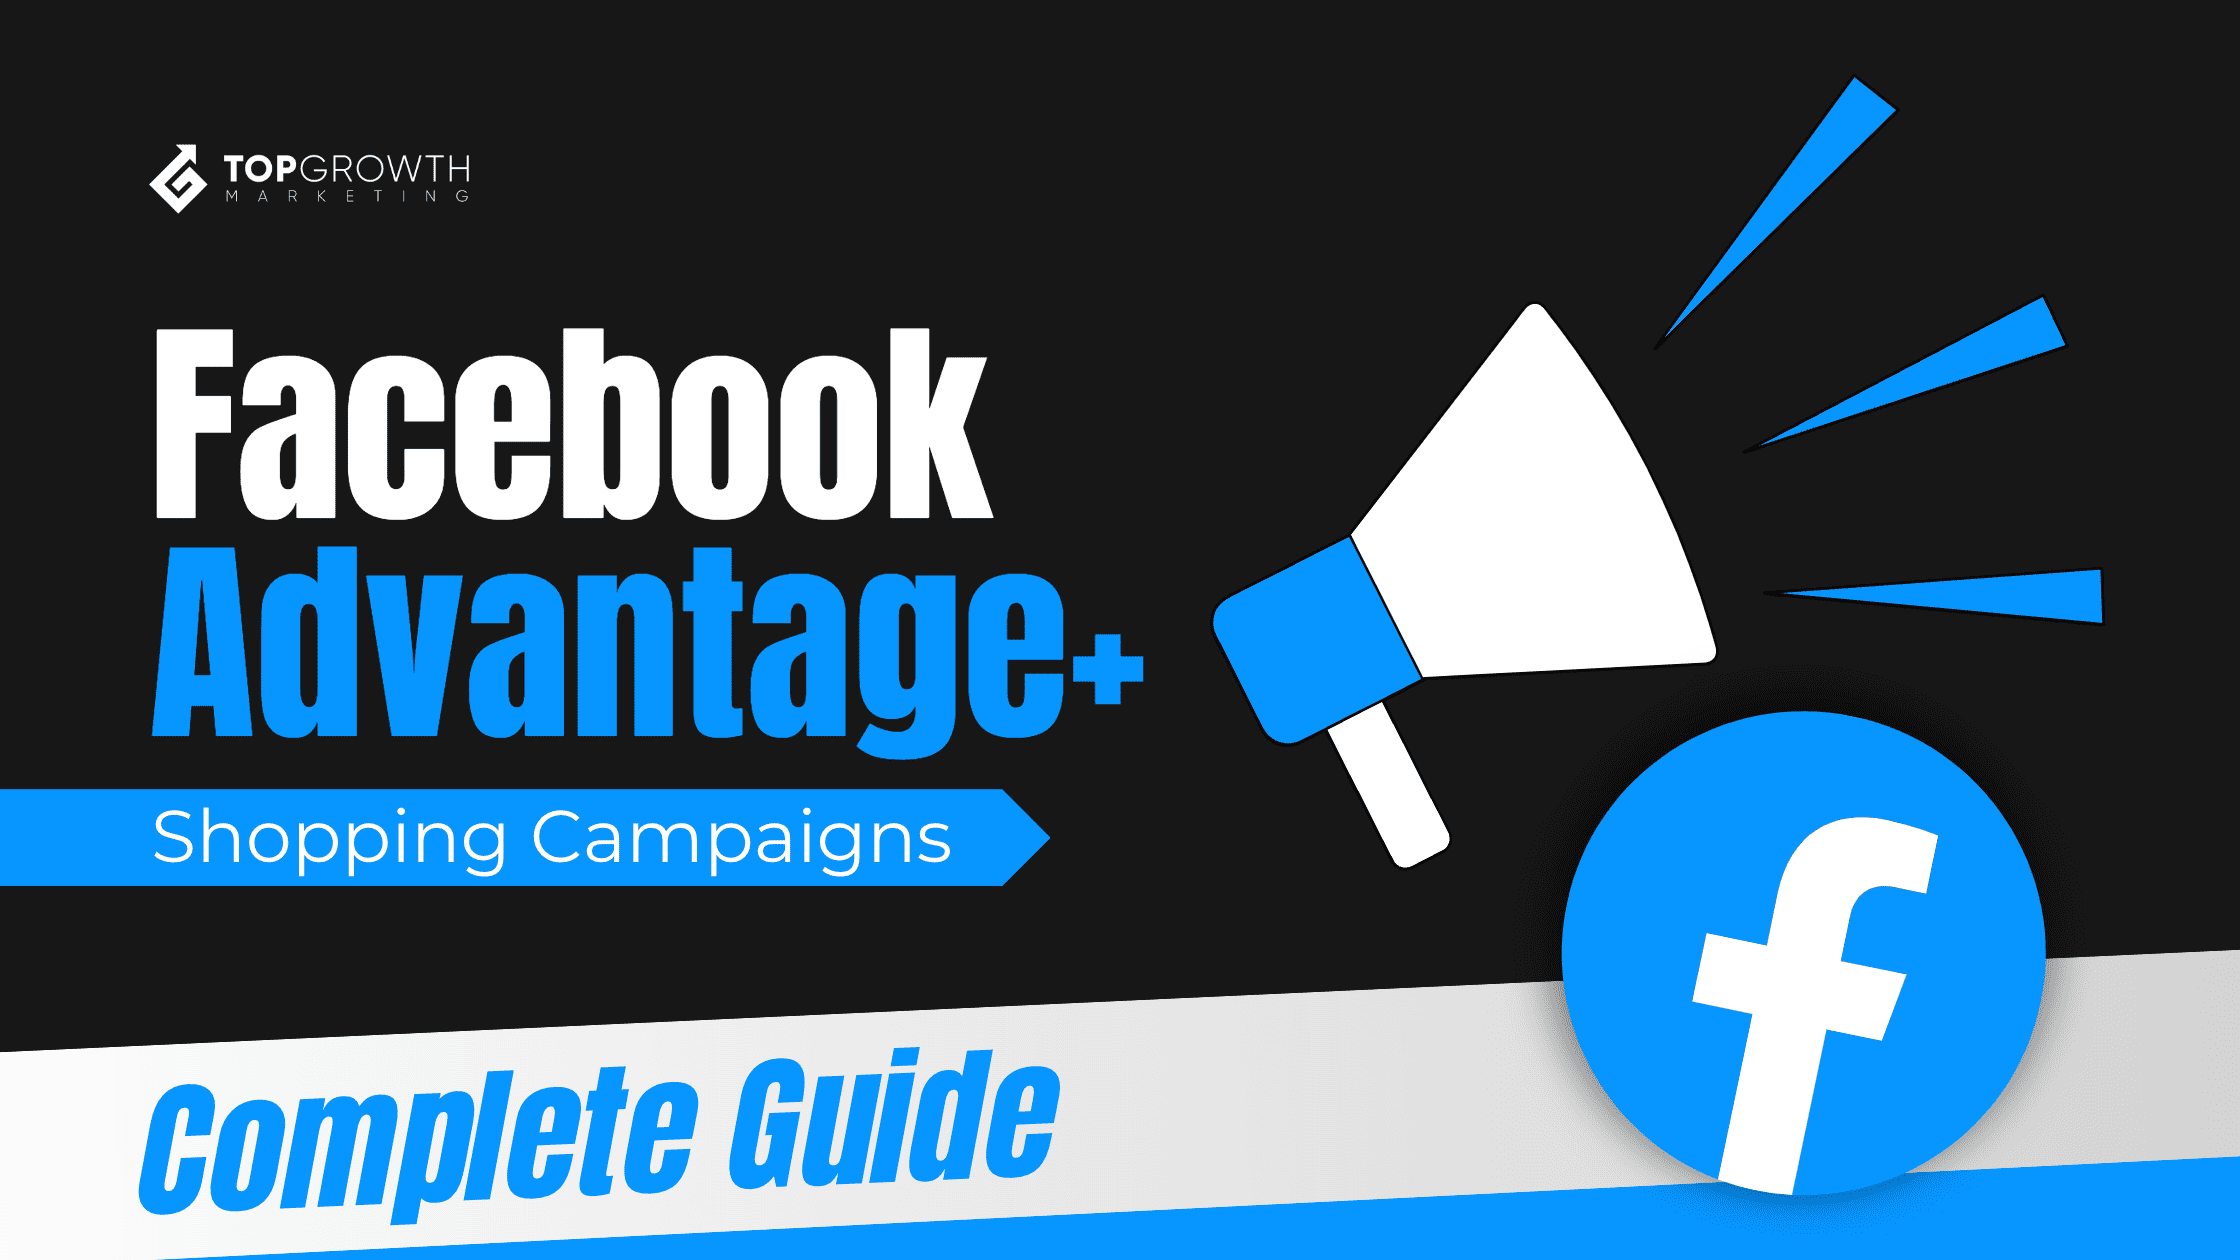 facebook advantage plus shopping campaigns guide